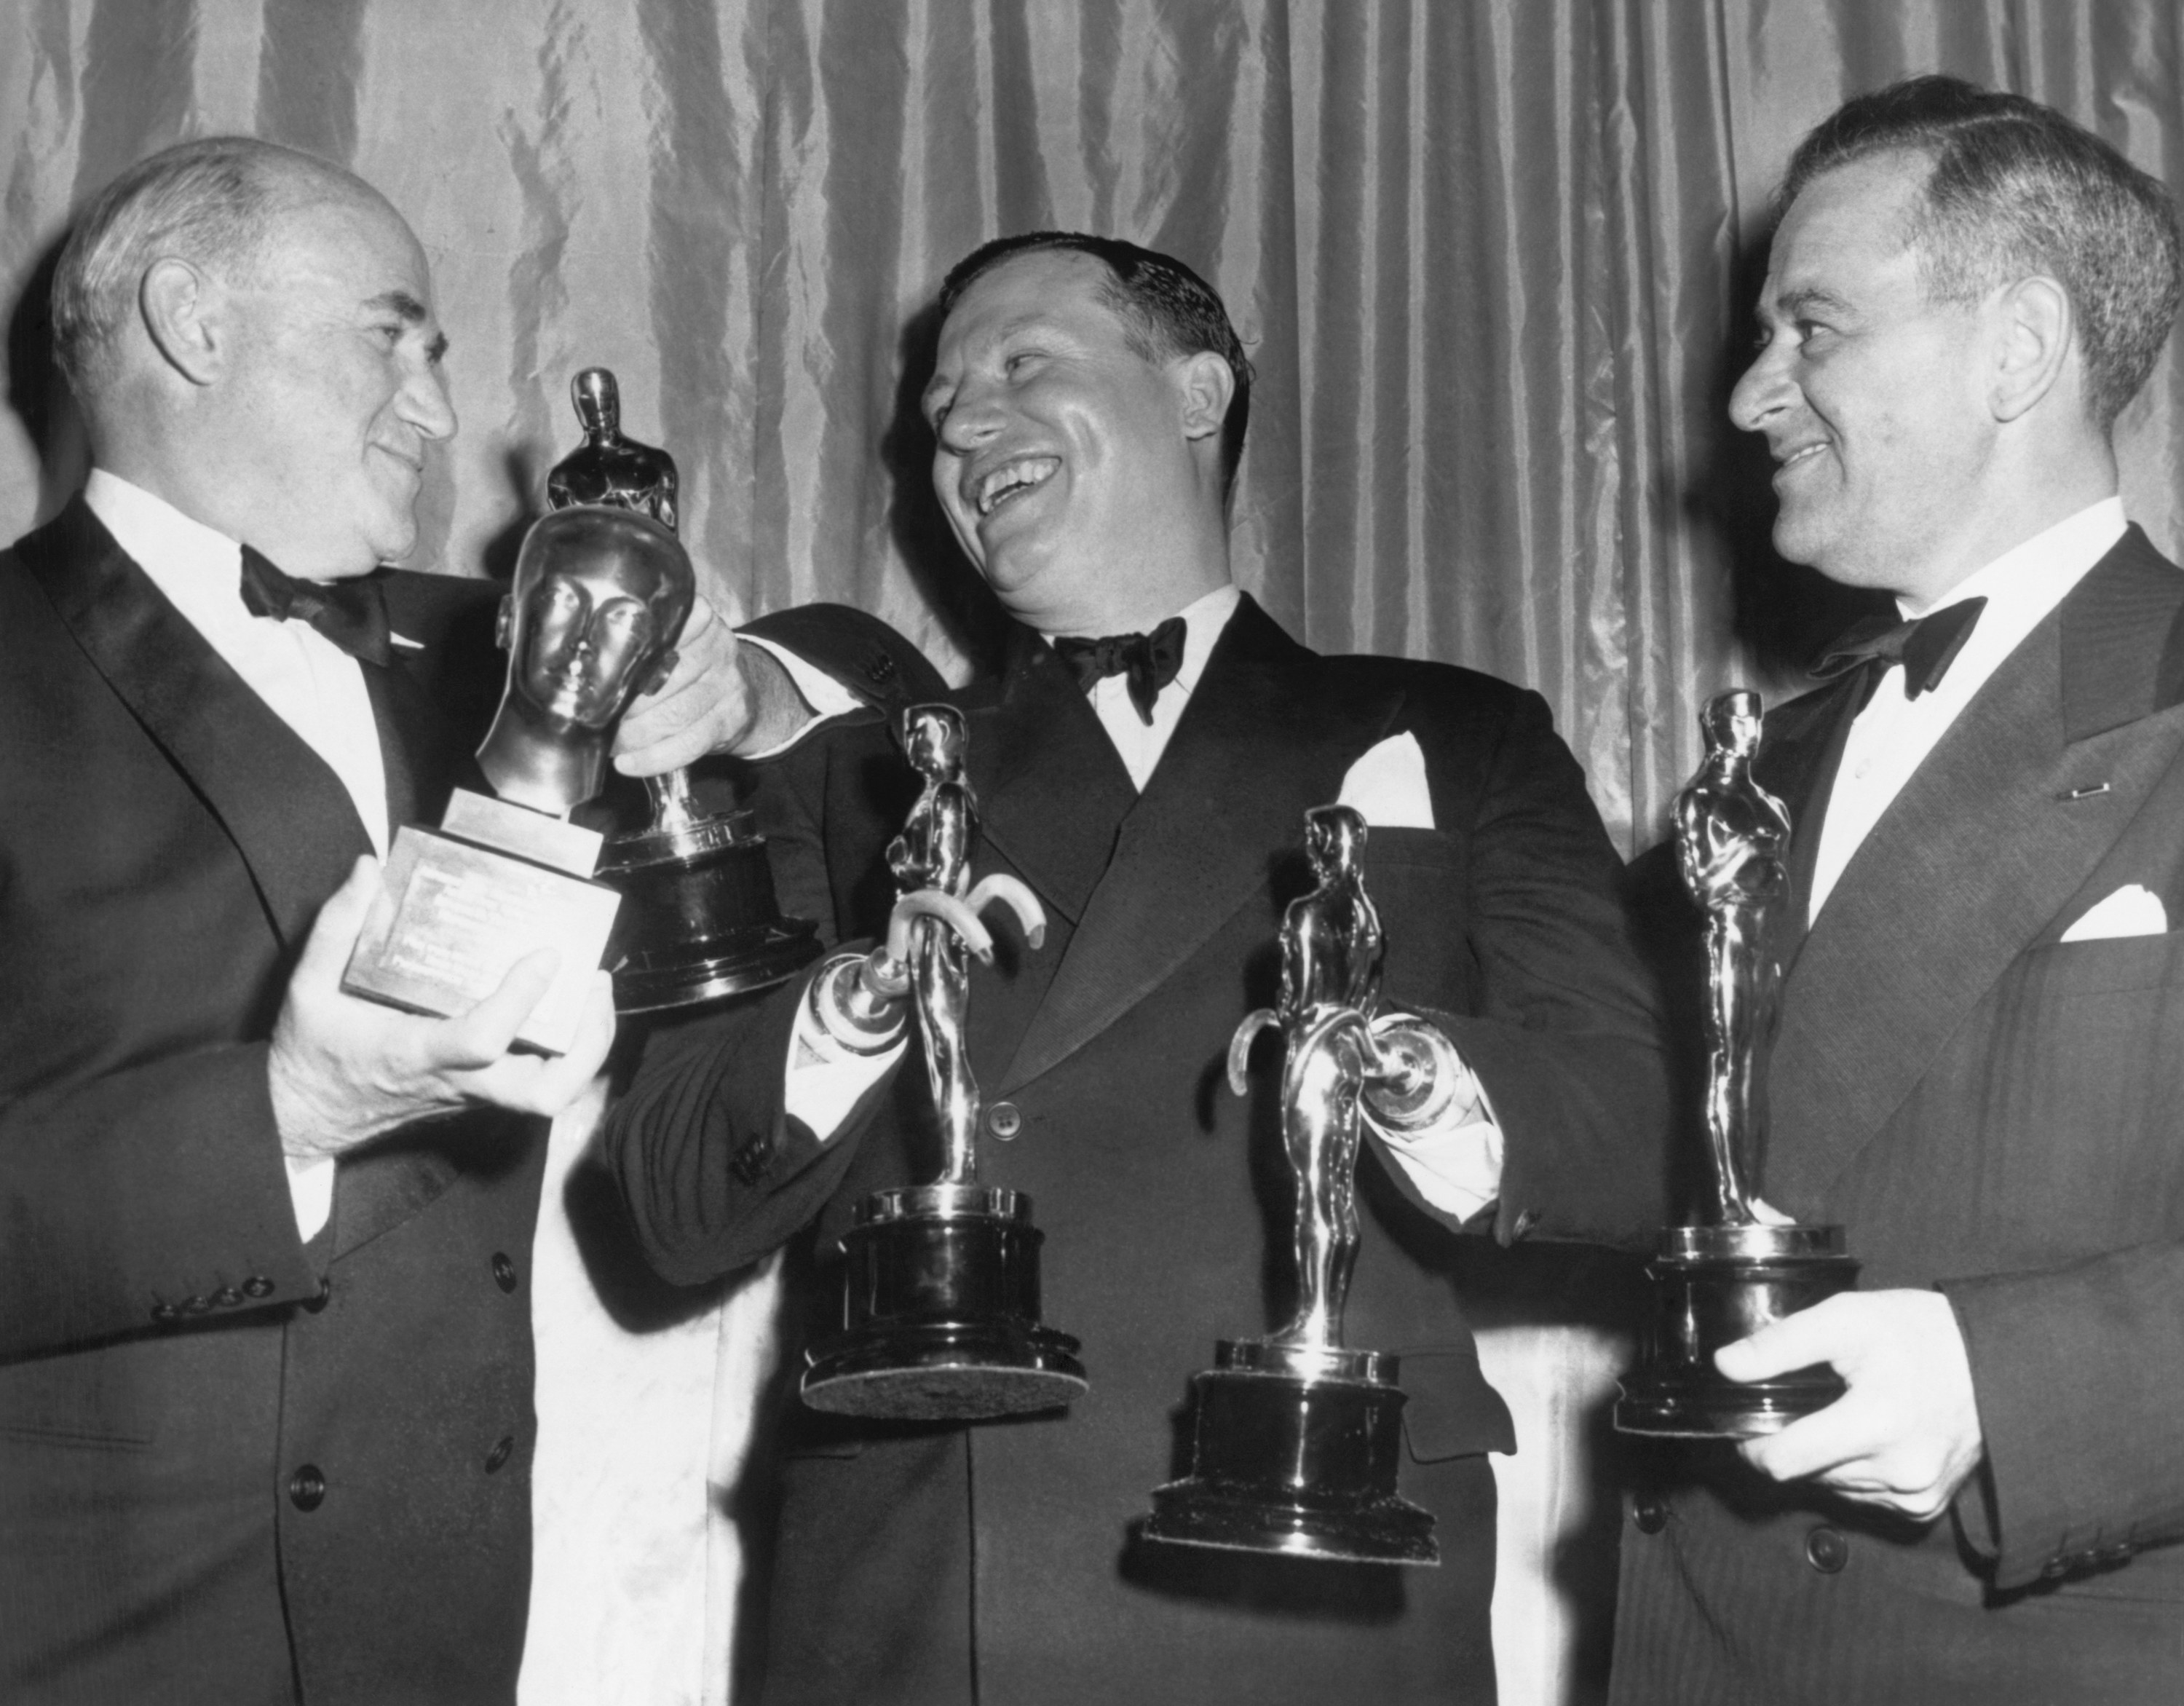 Harold holding both Oscars at the ceremony